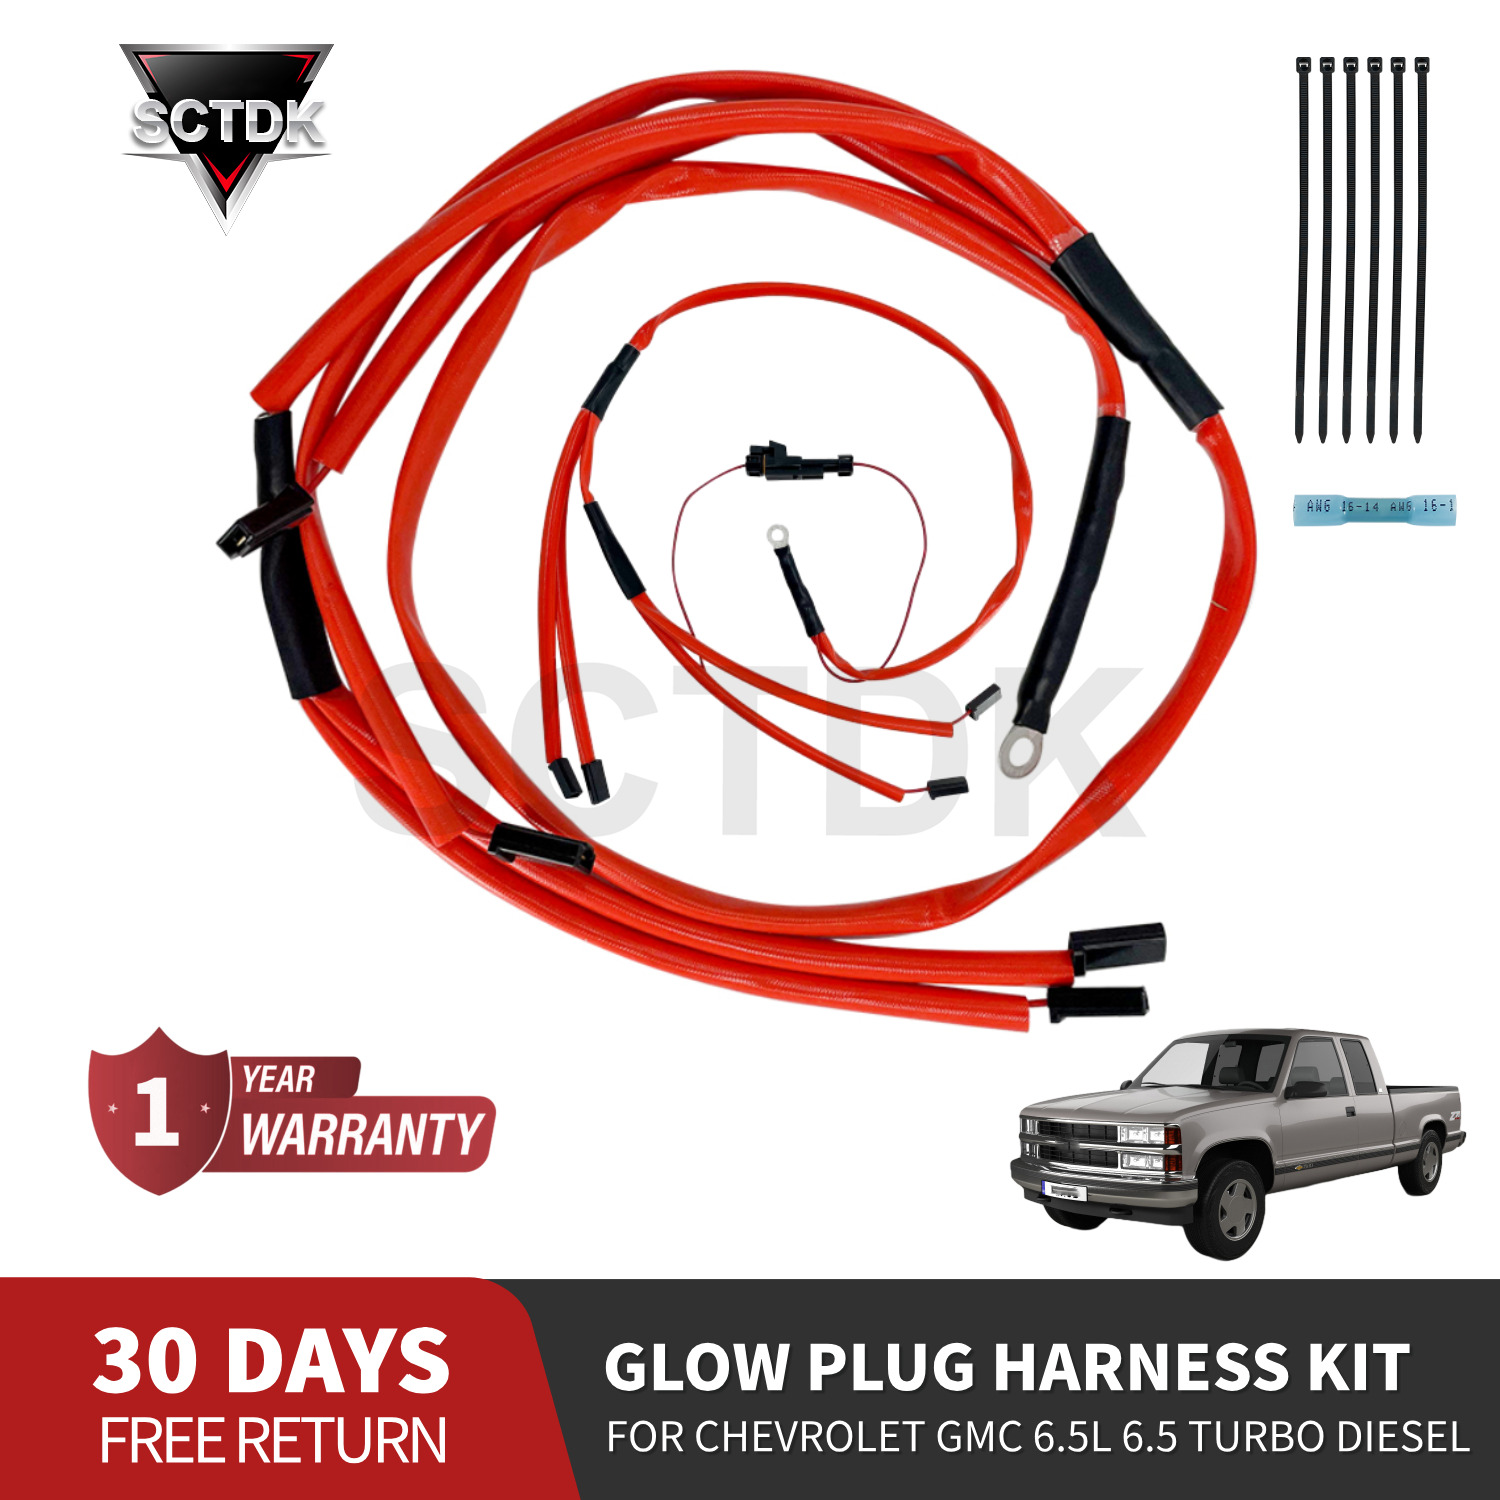  Red Glow Plug Harness Kit For Heavy Duty Chevrolet GMC 6.5L Turbo Diesel